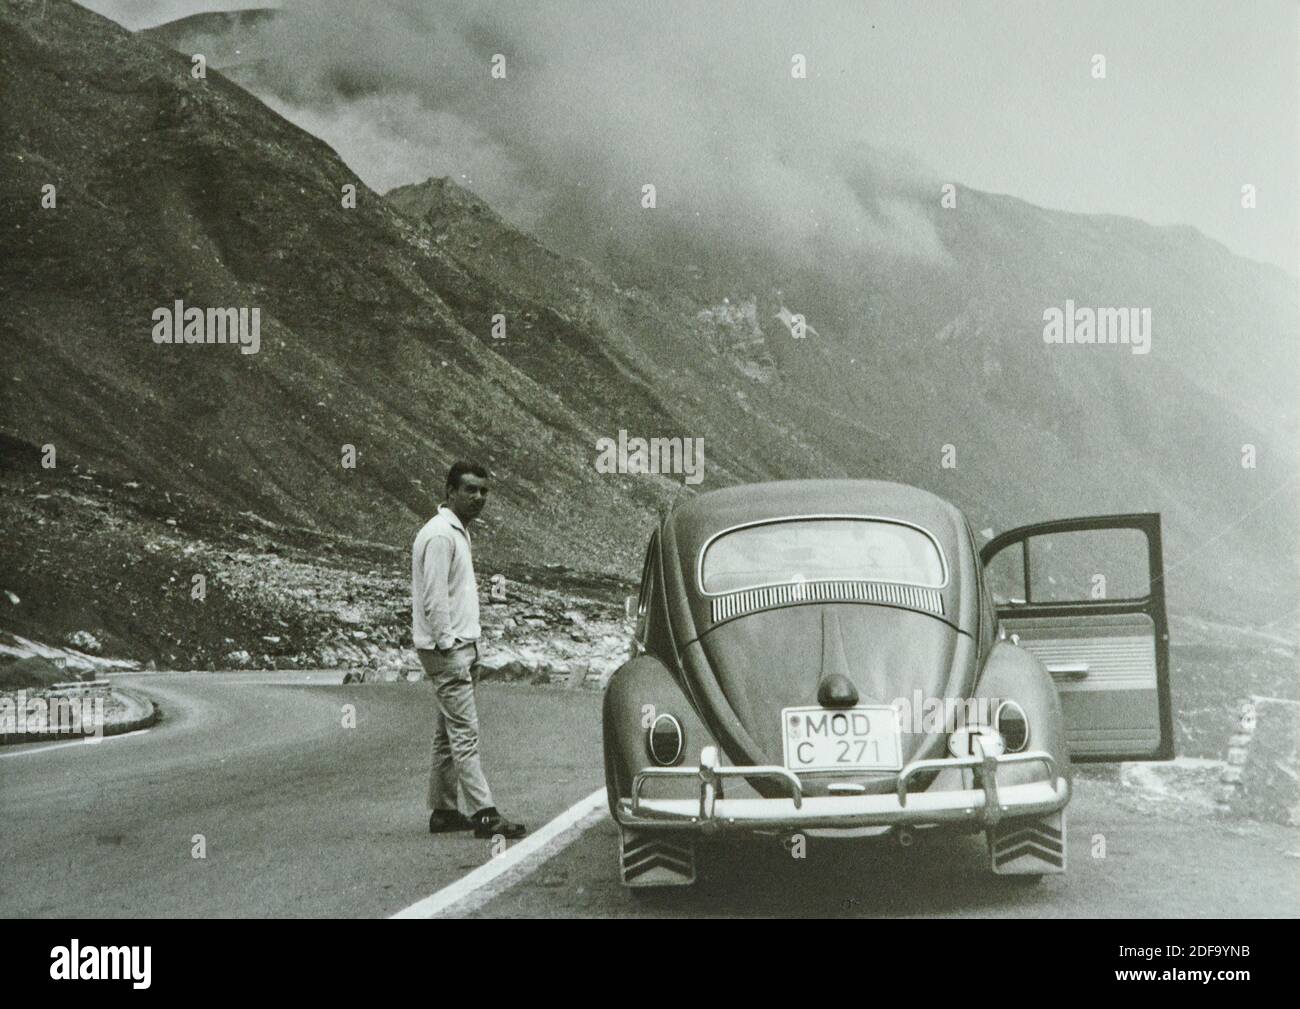 Historical Photo:  A man with a VW Kaefer car  1963 in Innsbruck, Austria. Reproduction in Marktoberdorf, Germany, October 26, 2020.  © Peter Schatz / Alamy Stock Photos Stock Photo